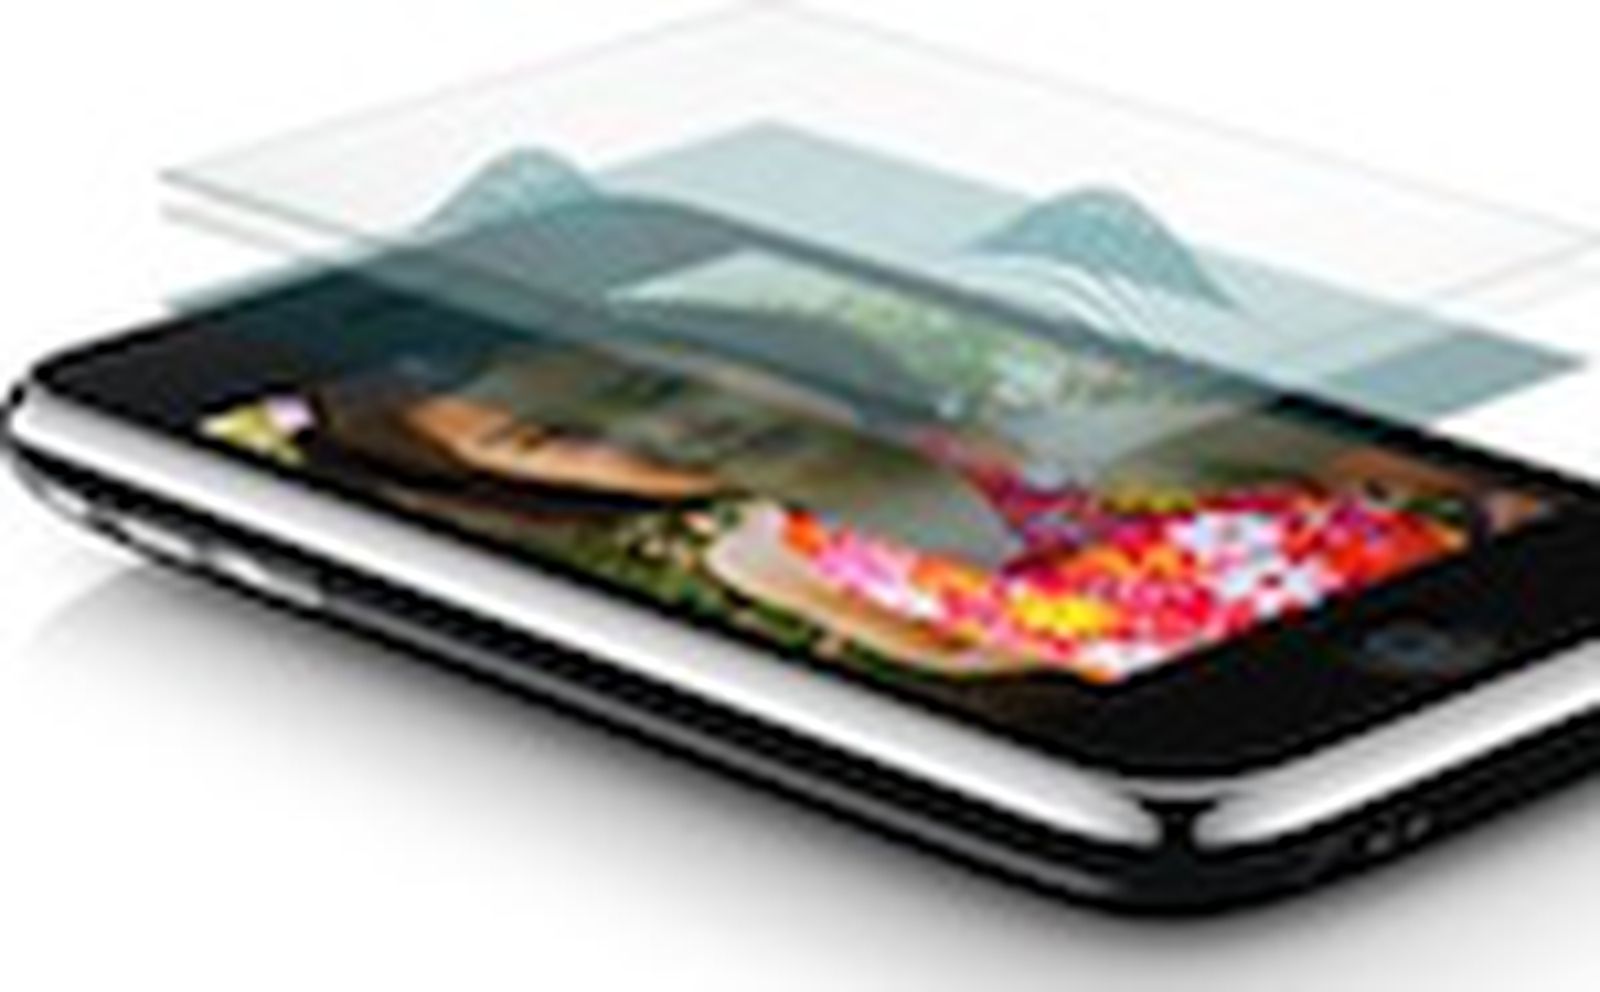 DigiTimes Claims Display Improvements in Next-Generation iPhone - MacRumors